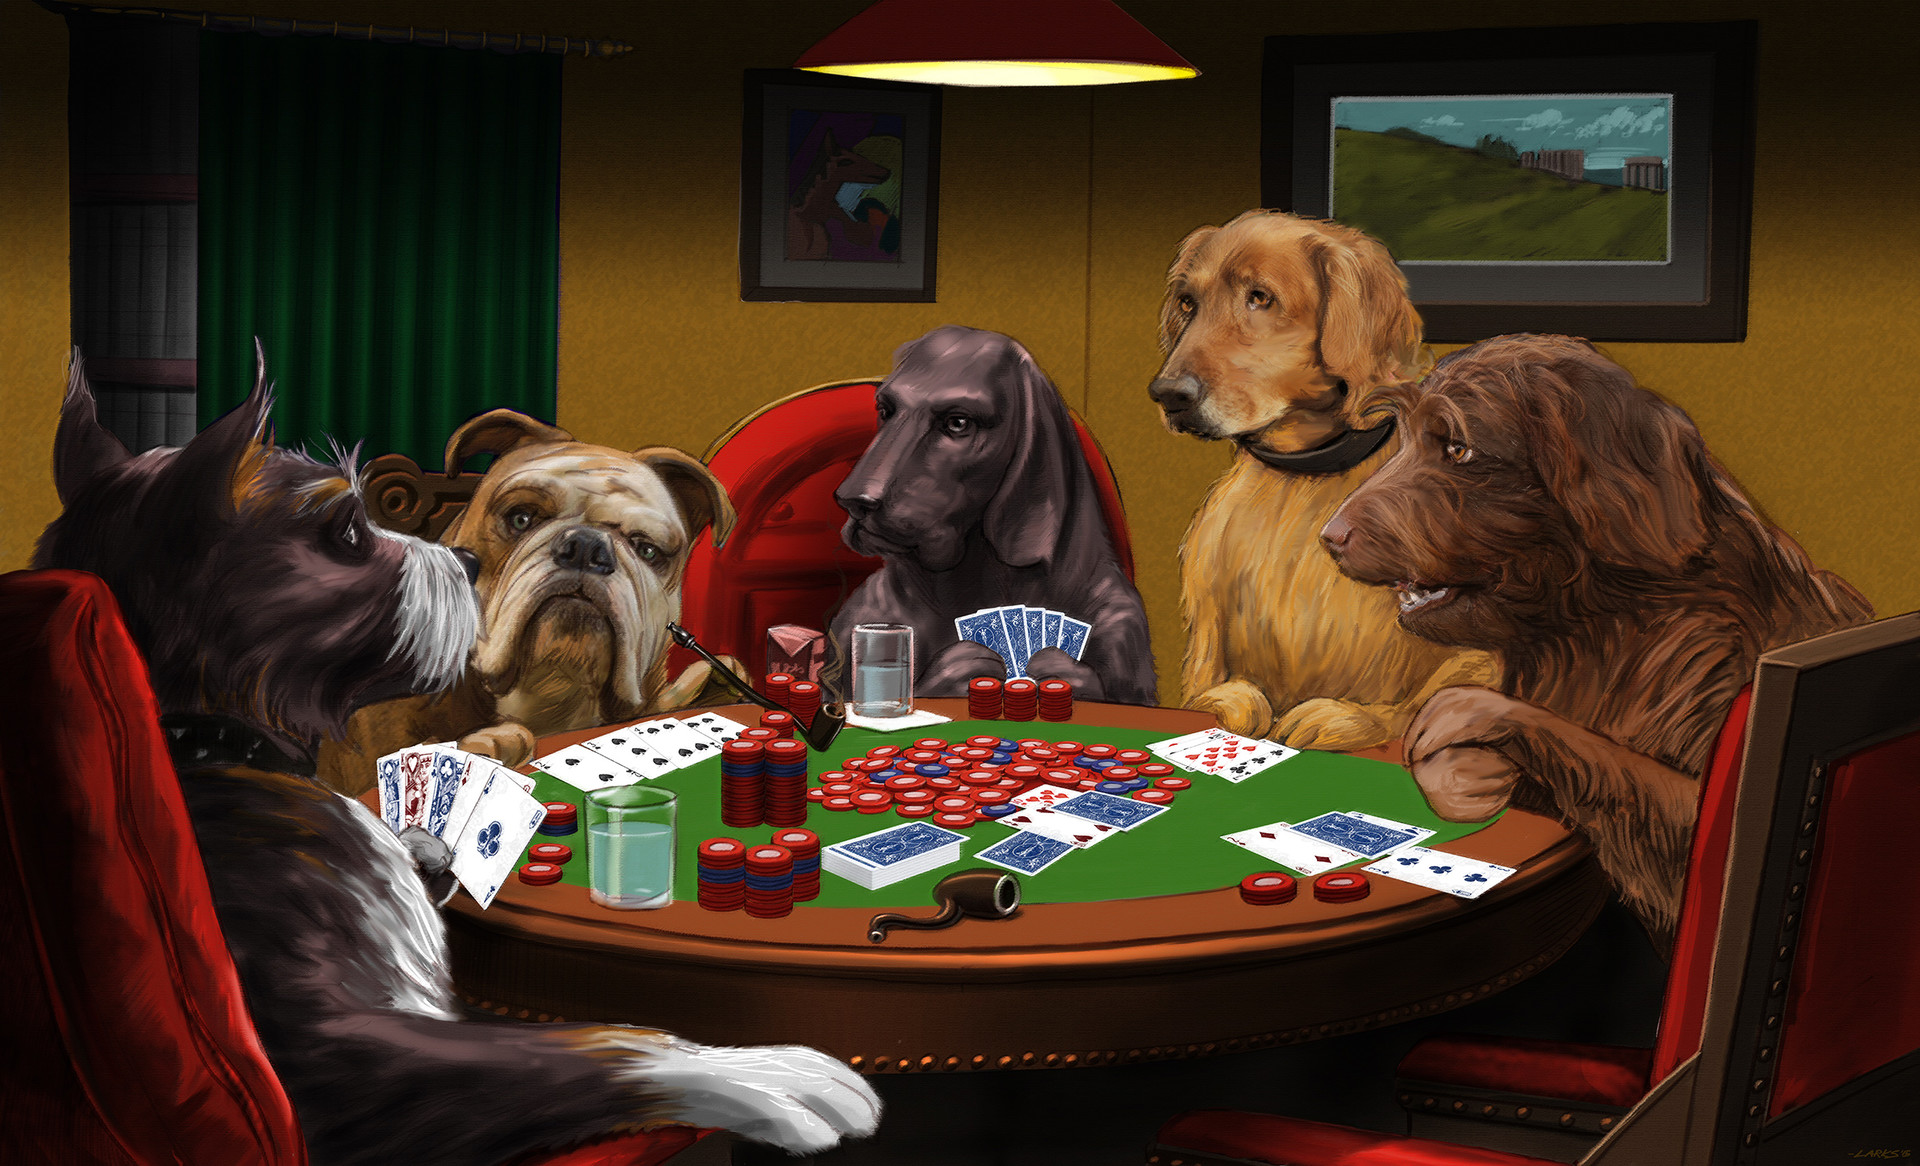 Собаки играют в покер кулидж. Кассиус Кулидж собаки. Кассиус Кулидж собаки играющие в Покер. Собаки играют в Покер Кассиус Кулидж. Кассиус Кулидж собаки бильярд.